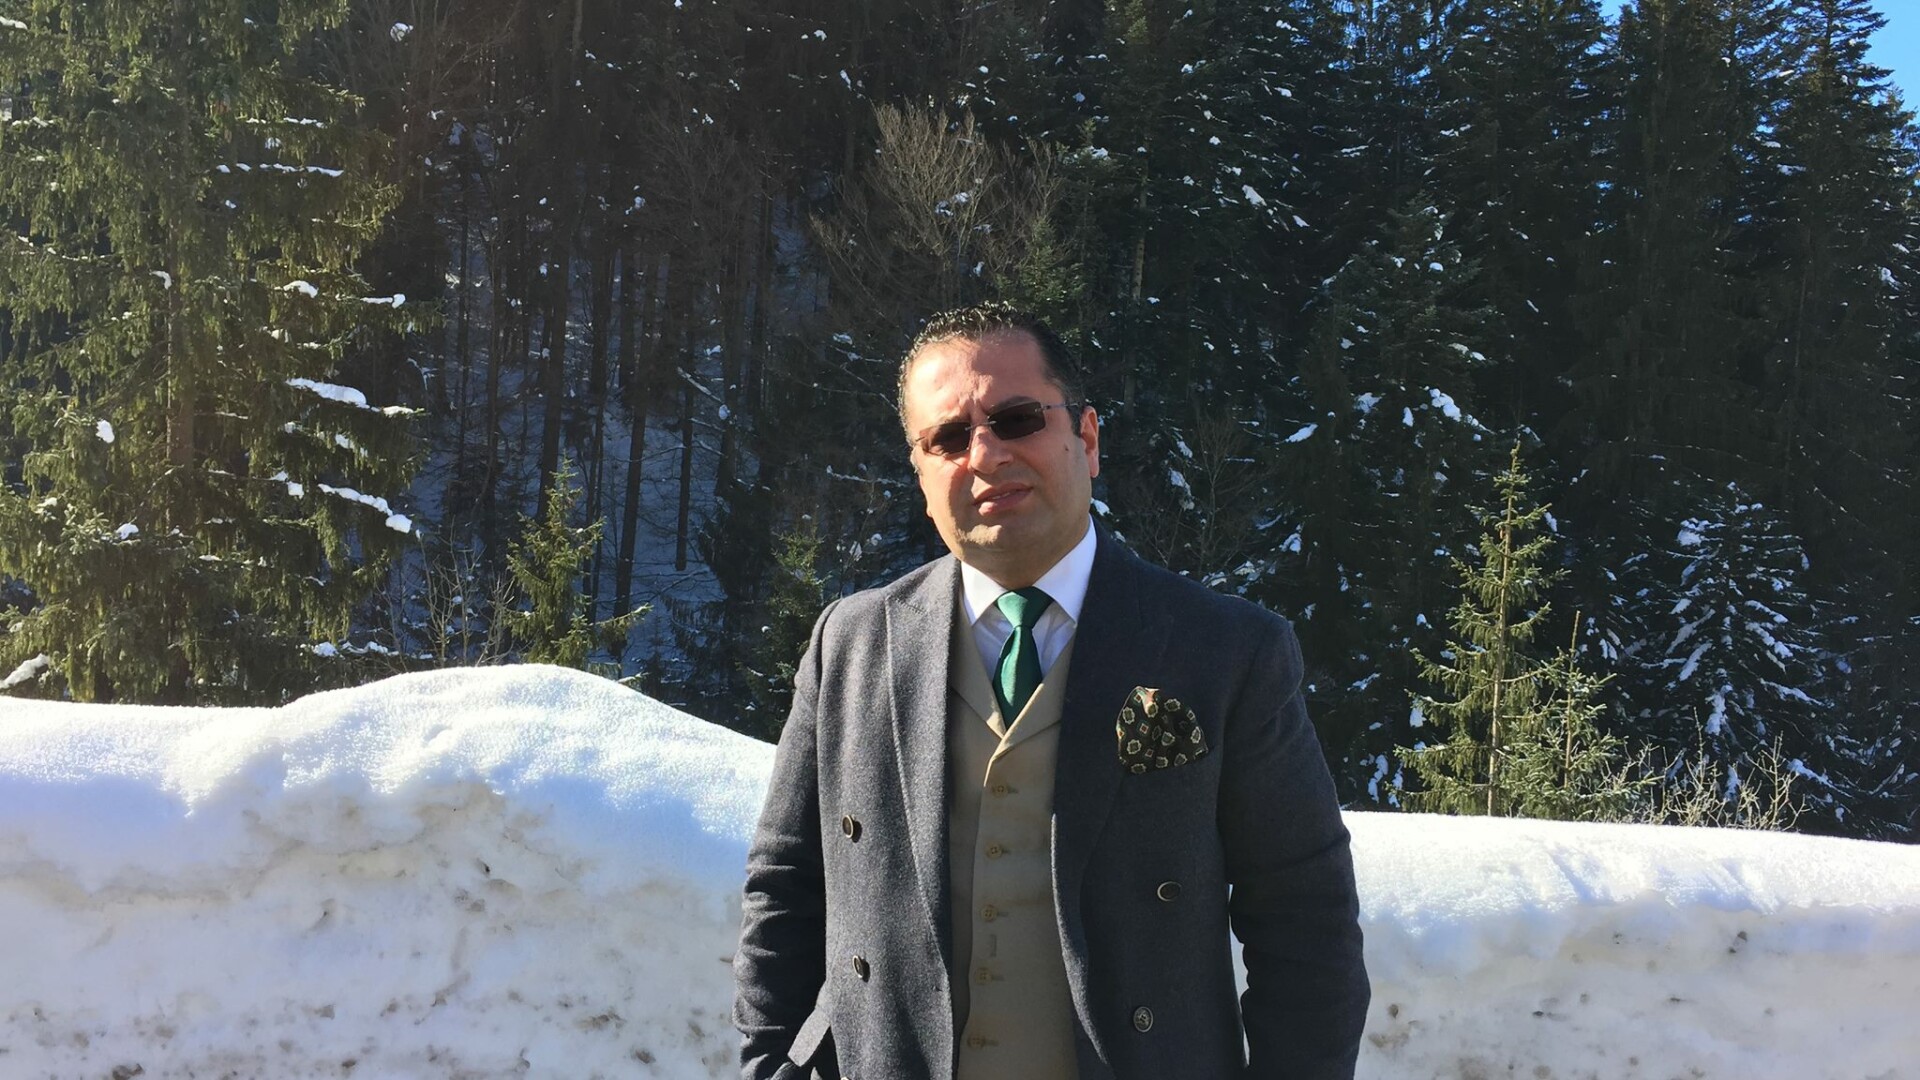 Saeed Karimian